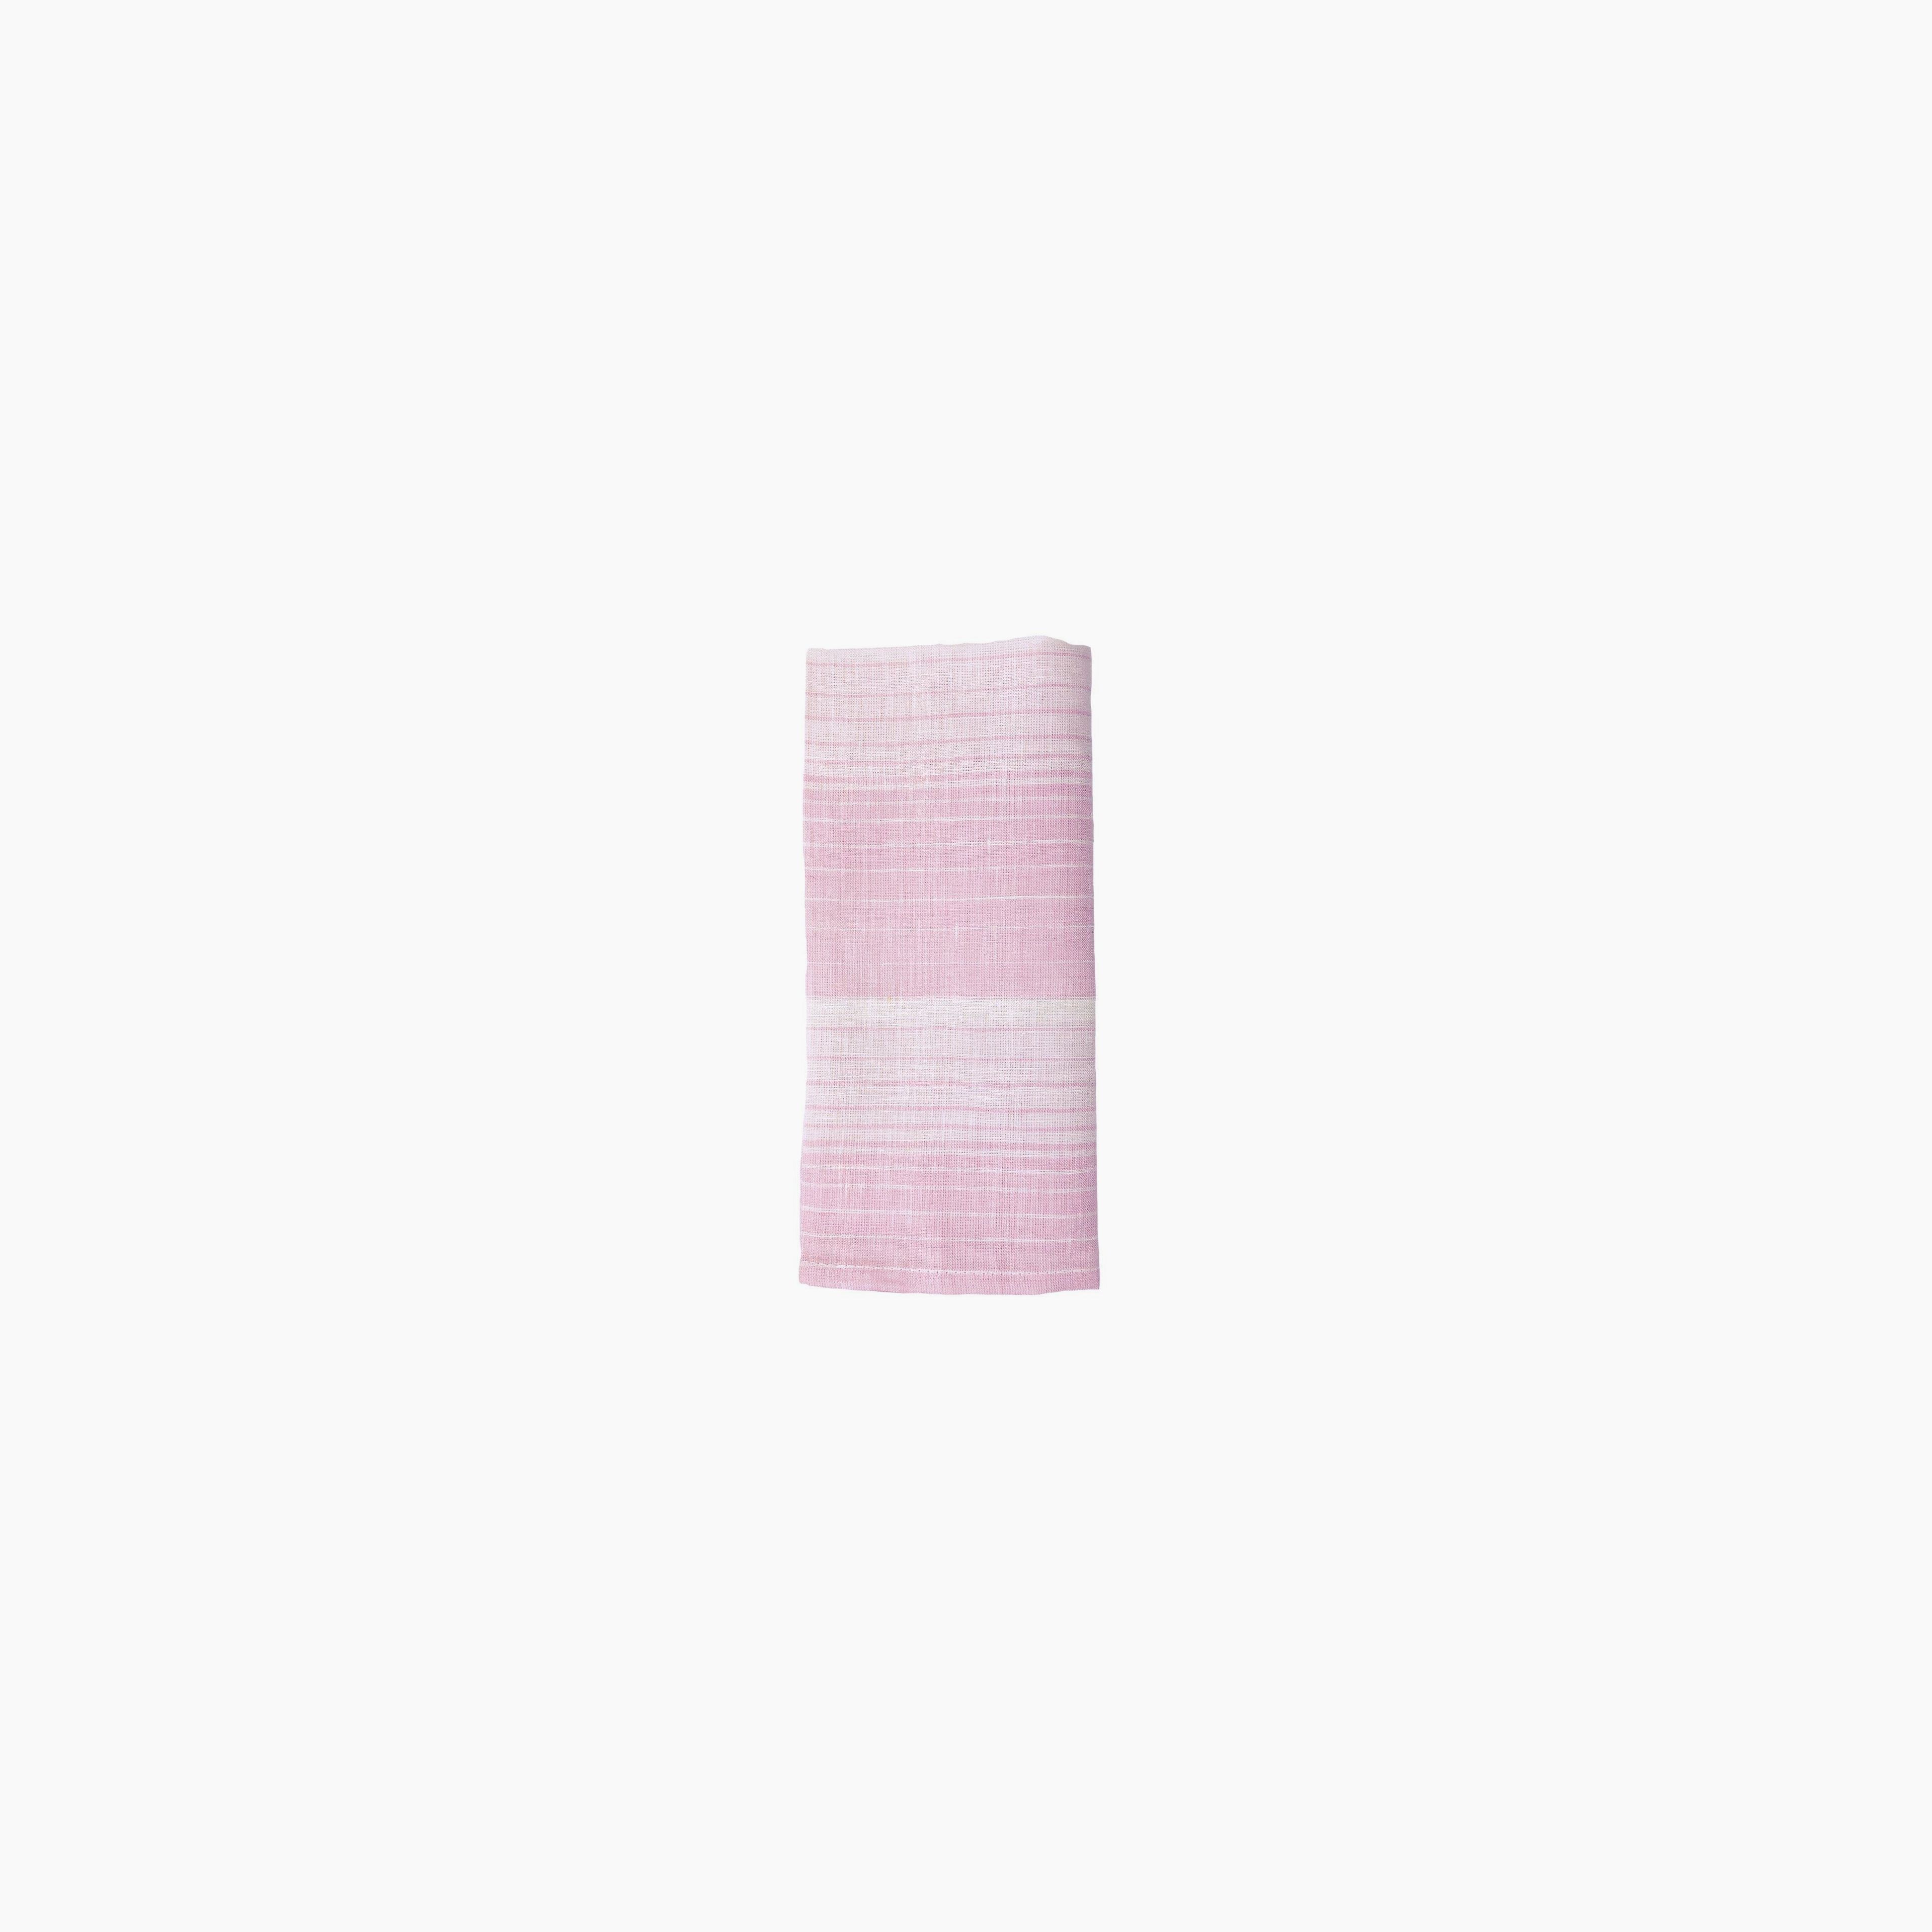 Napkin in Cortina Pink Linen